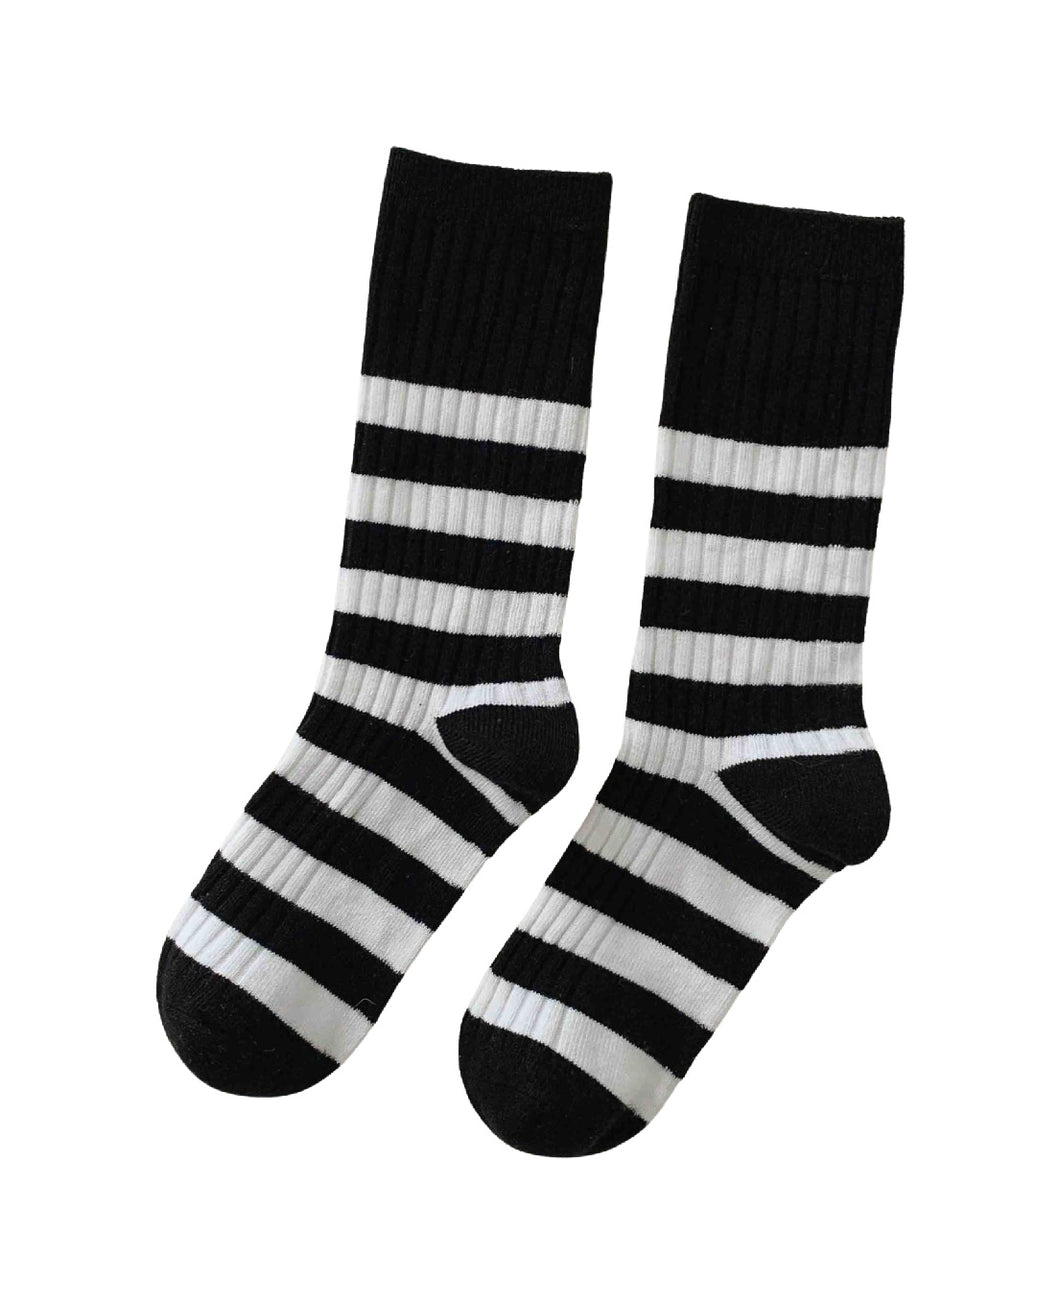 Showtime Striped Socks (Adults)